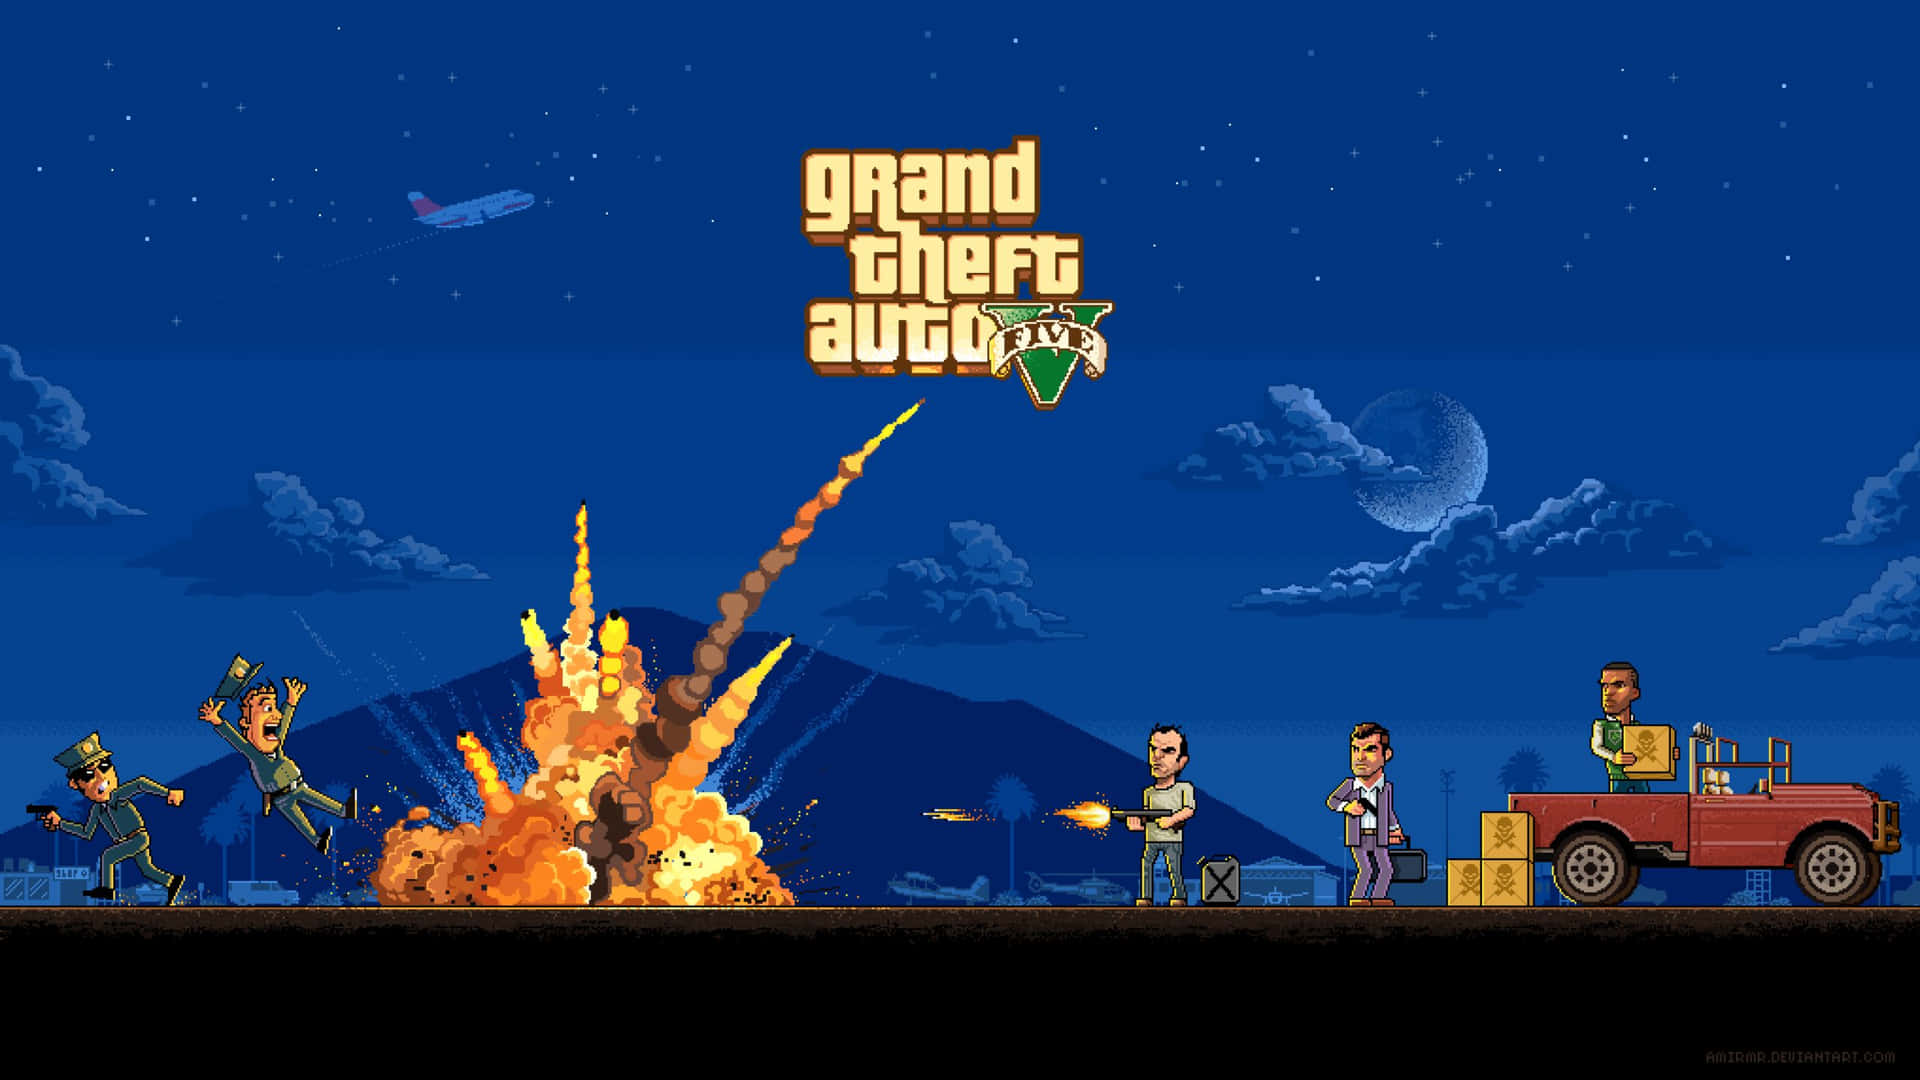 1440p Grand Theft Auto V Background Pixel Art